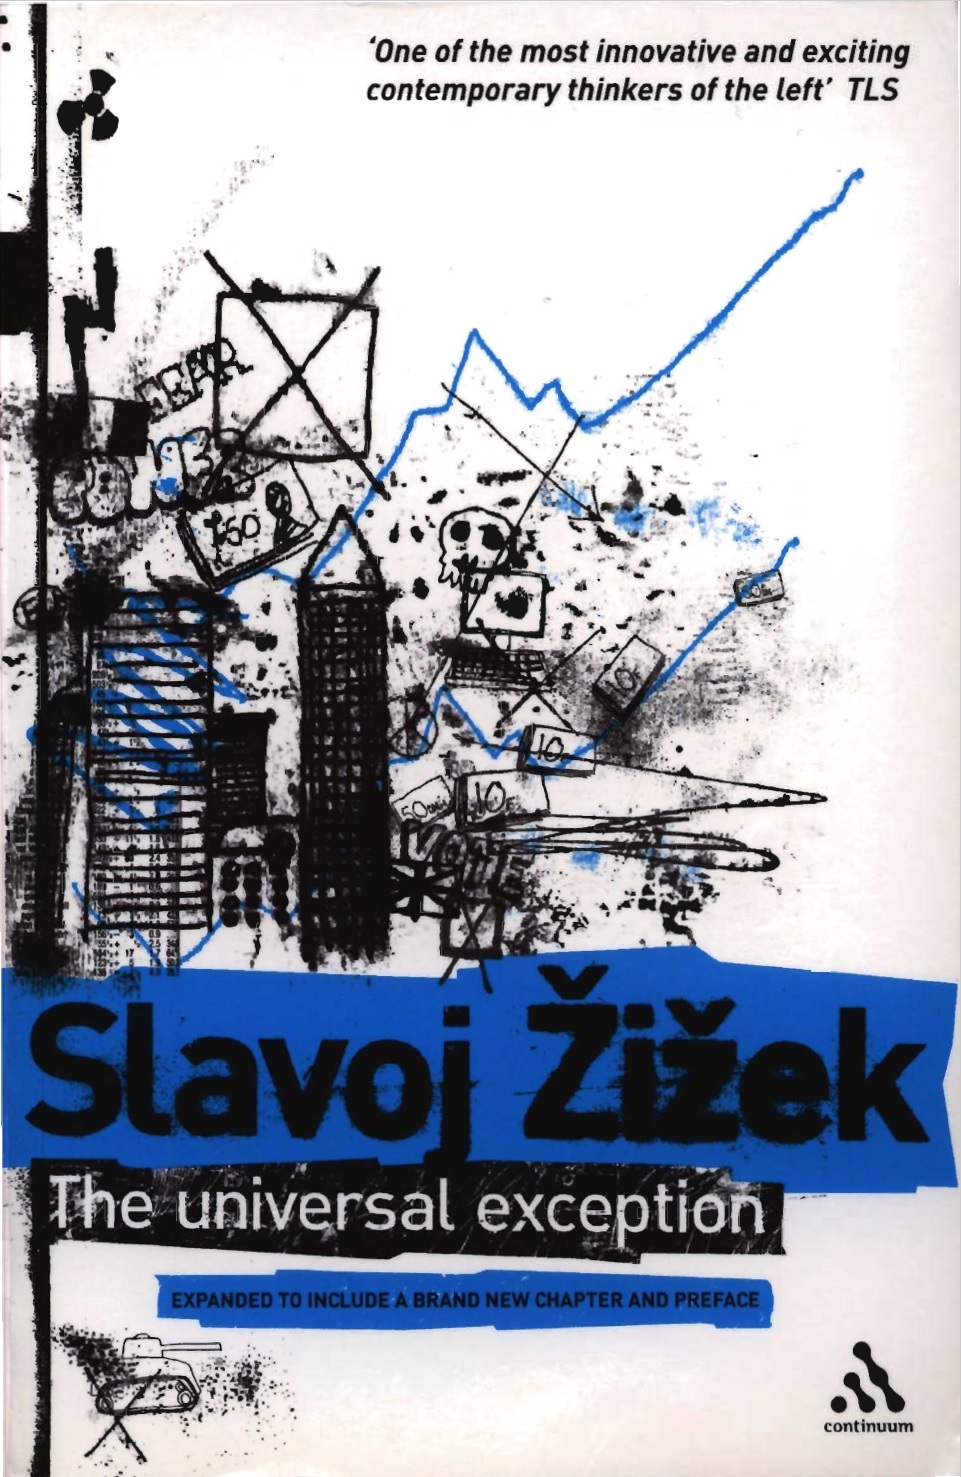 Slavoj-zizek-the-universal-exception-theoryleaks.jpg